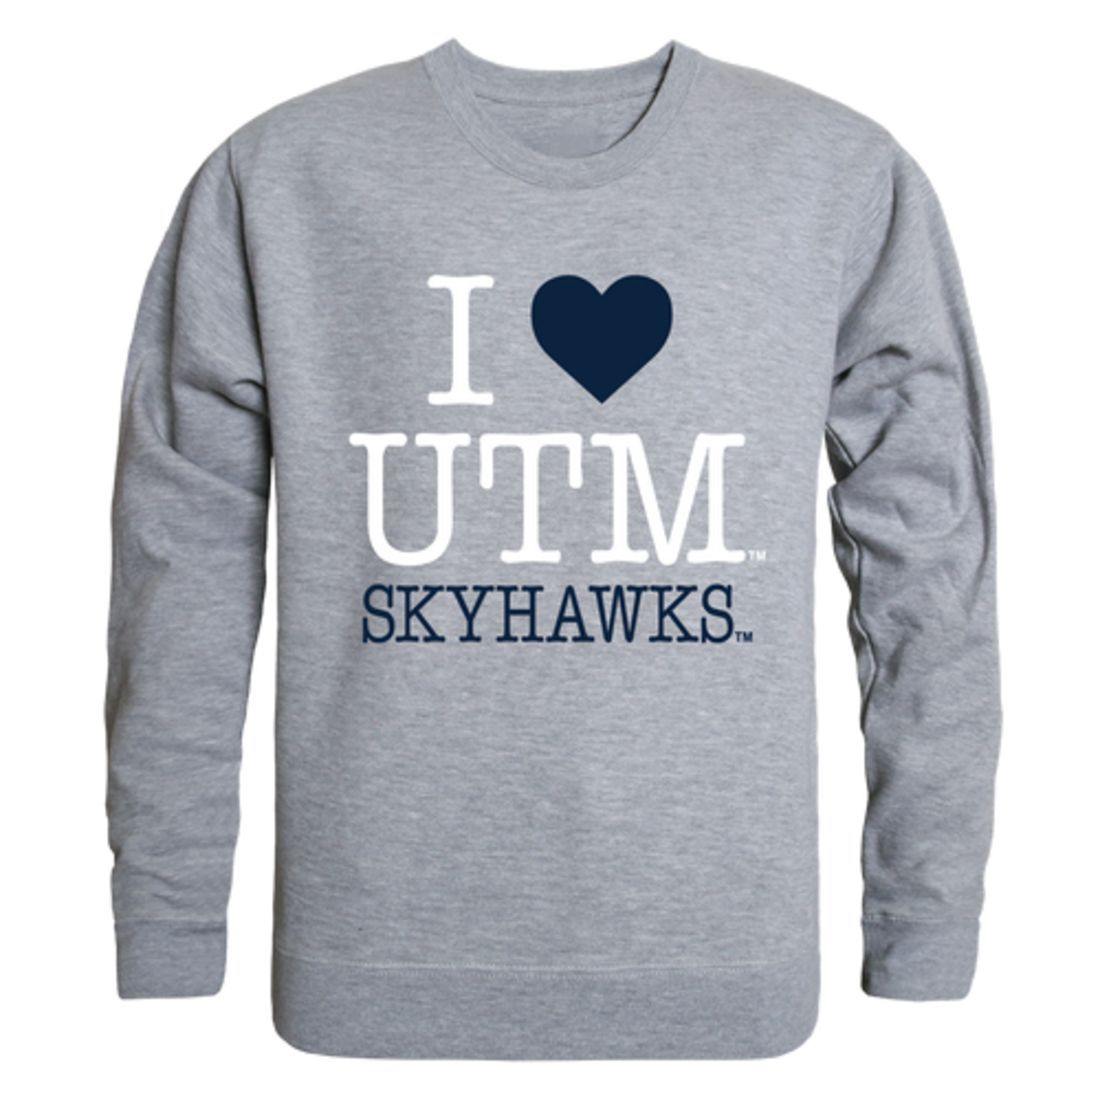 I Love UT University of Tennessee at Martin Skyhawks Crewneck Pullover Sweatshirt Sweater-Campus-Wardrobe